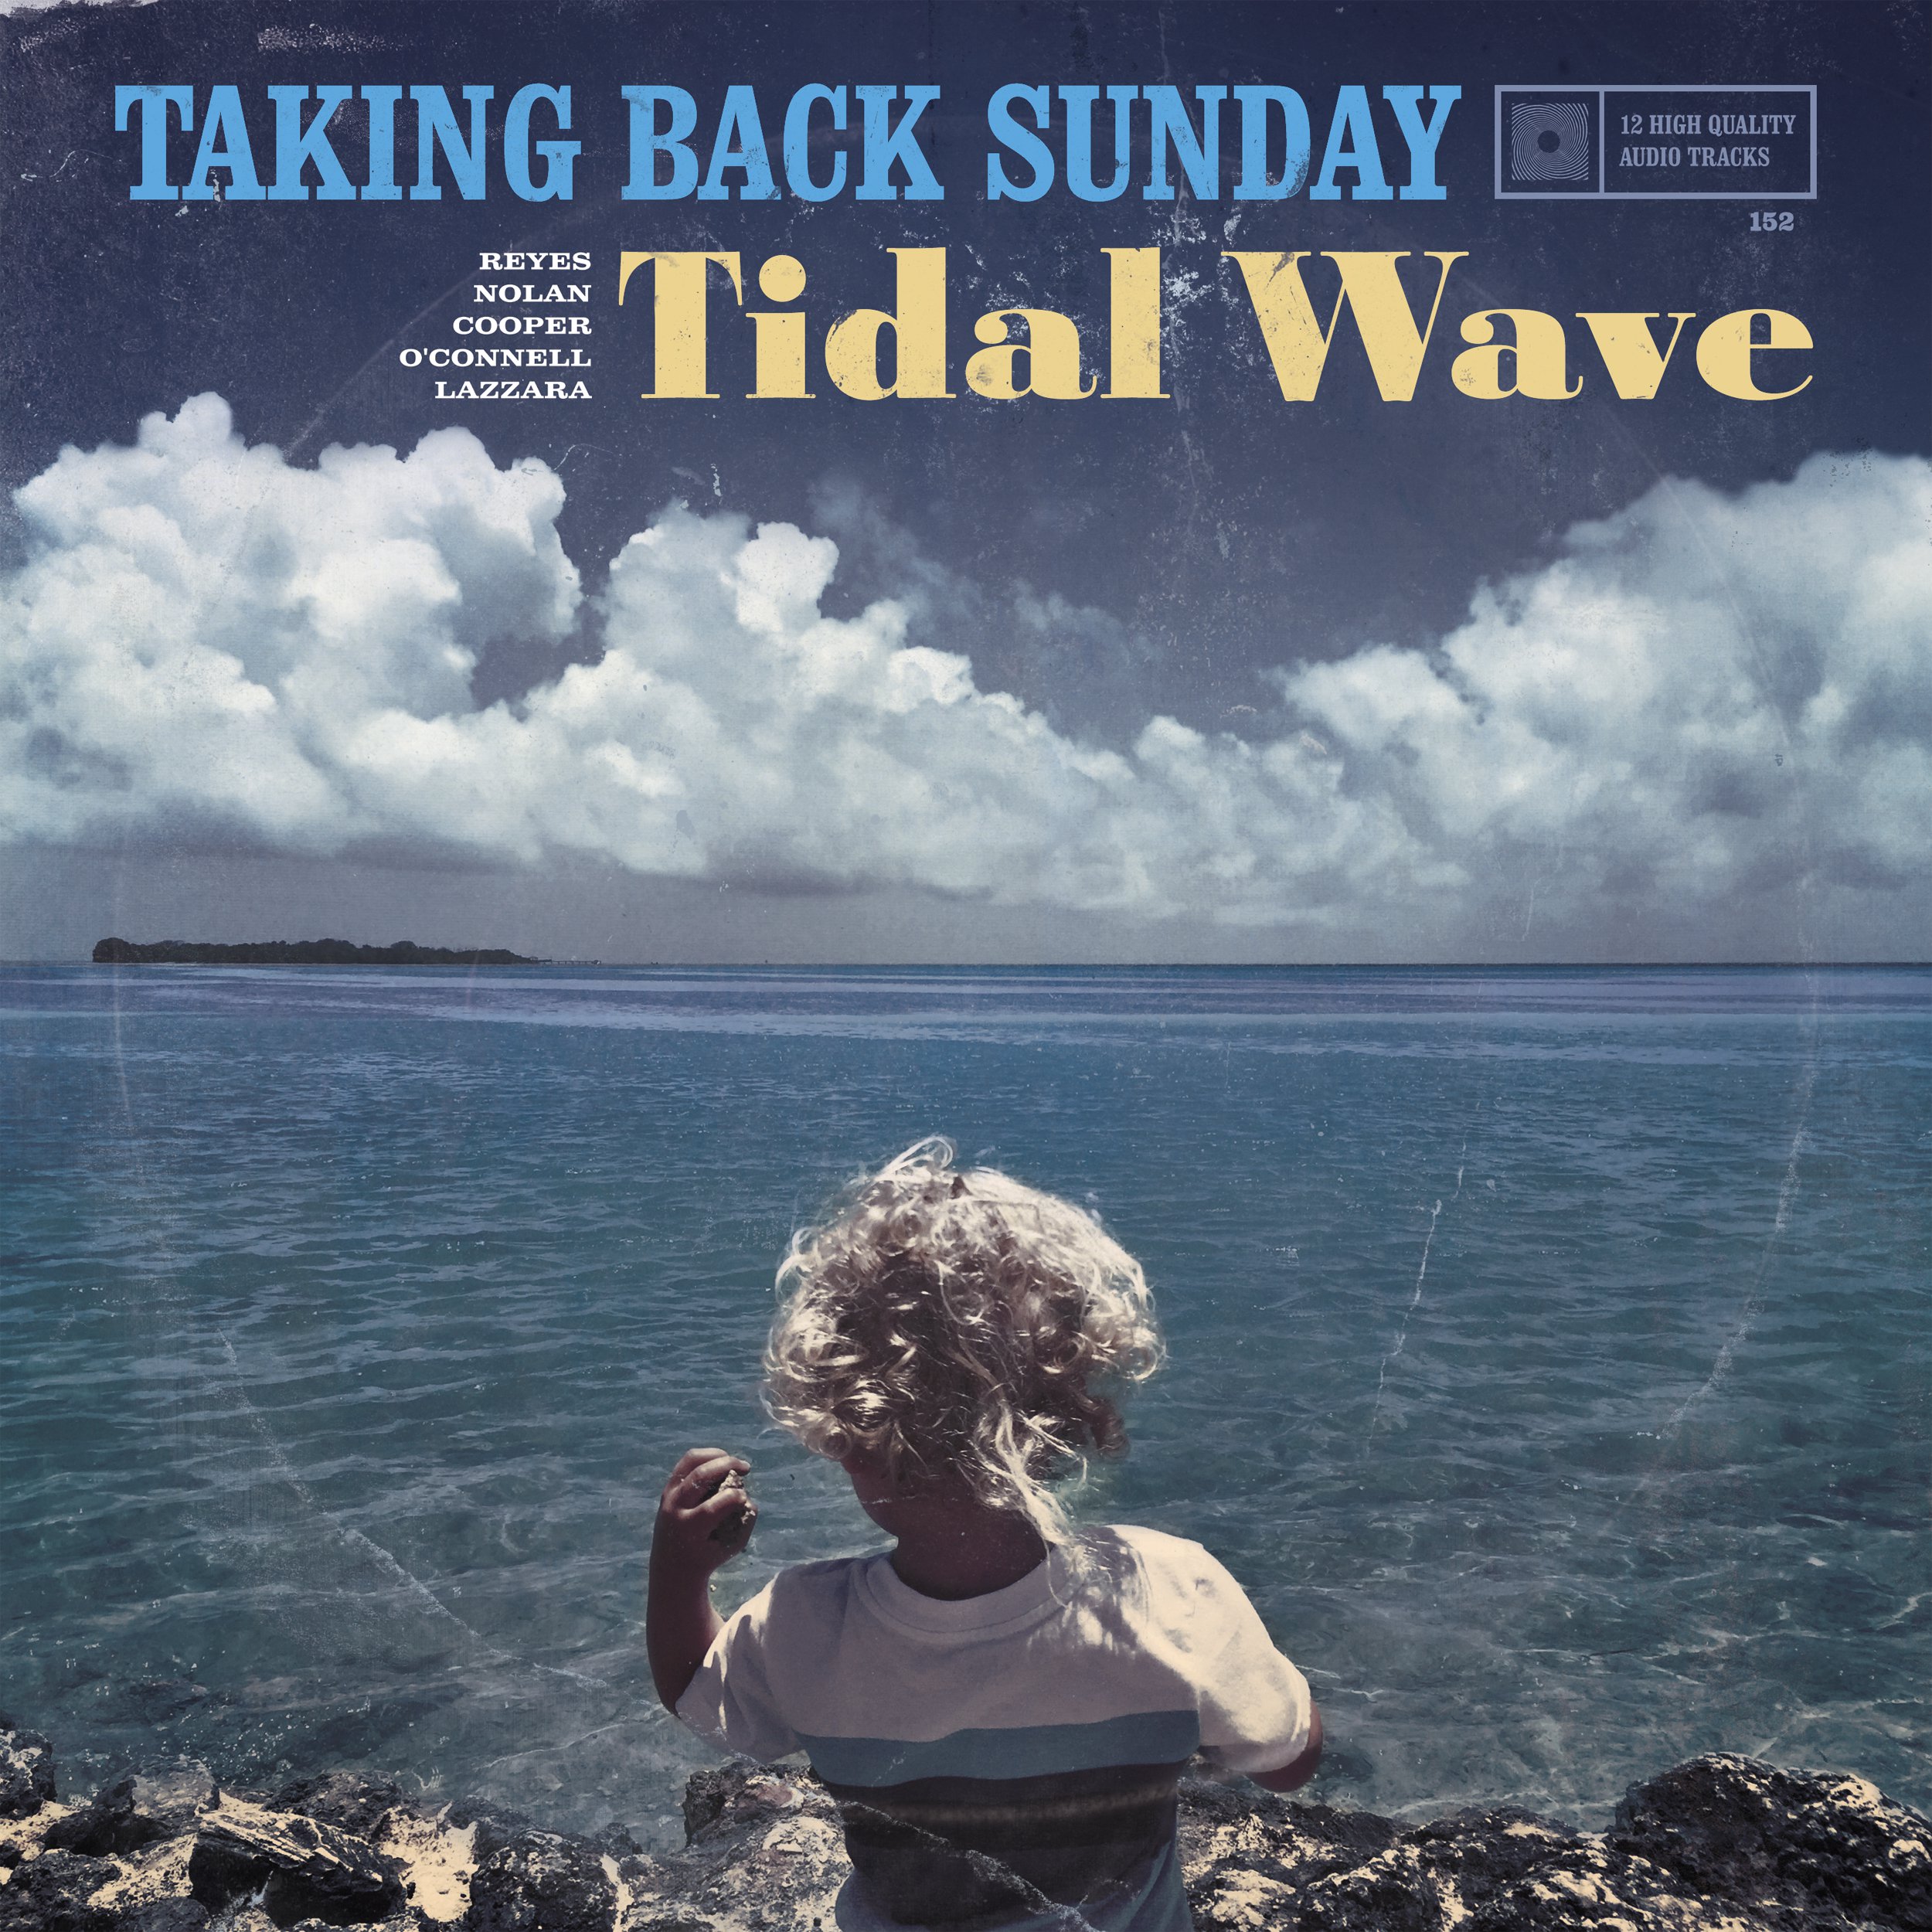 tbs_tidalwave